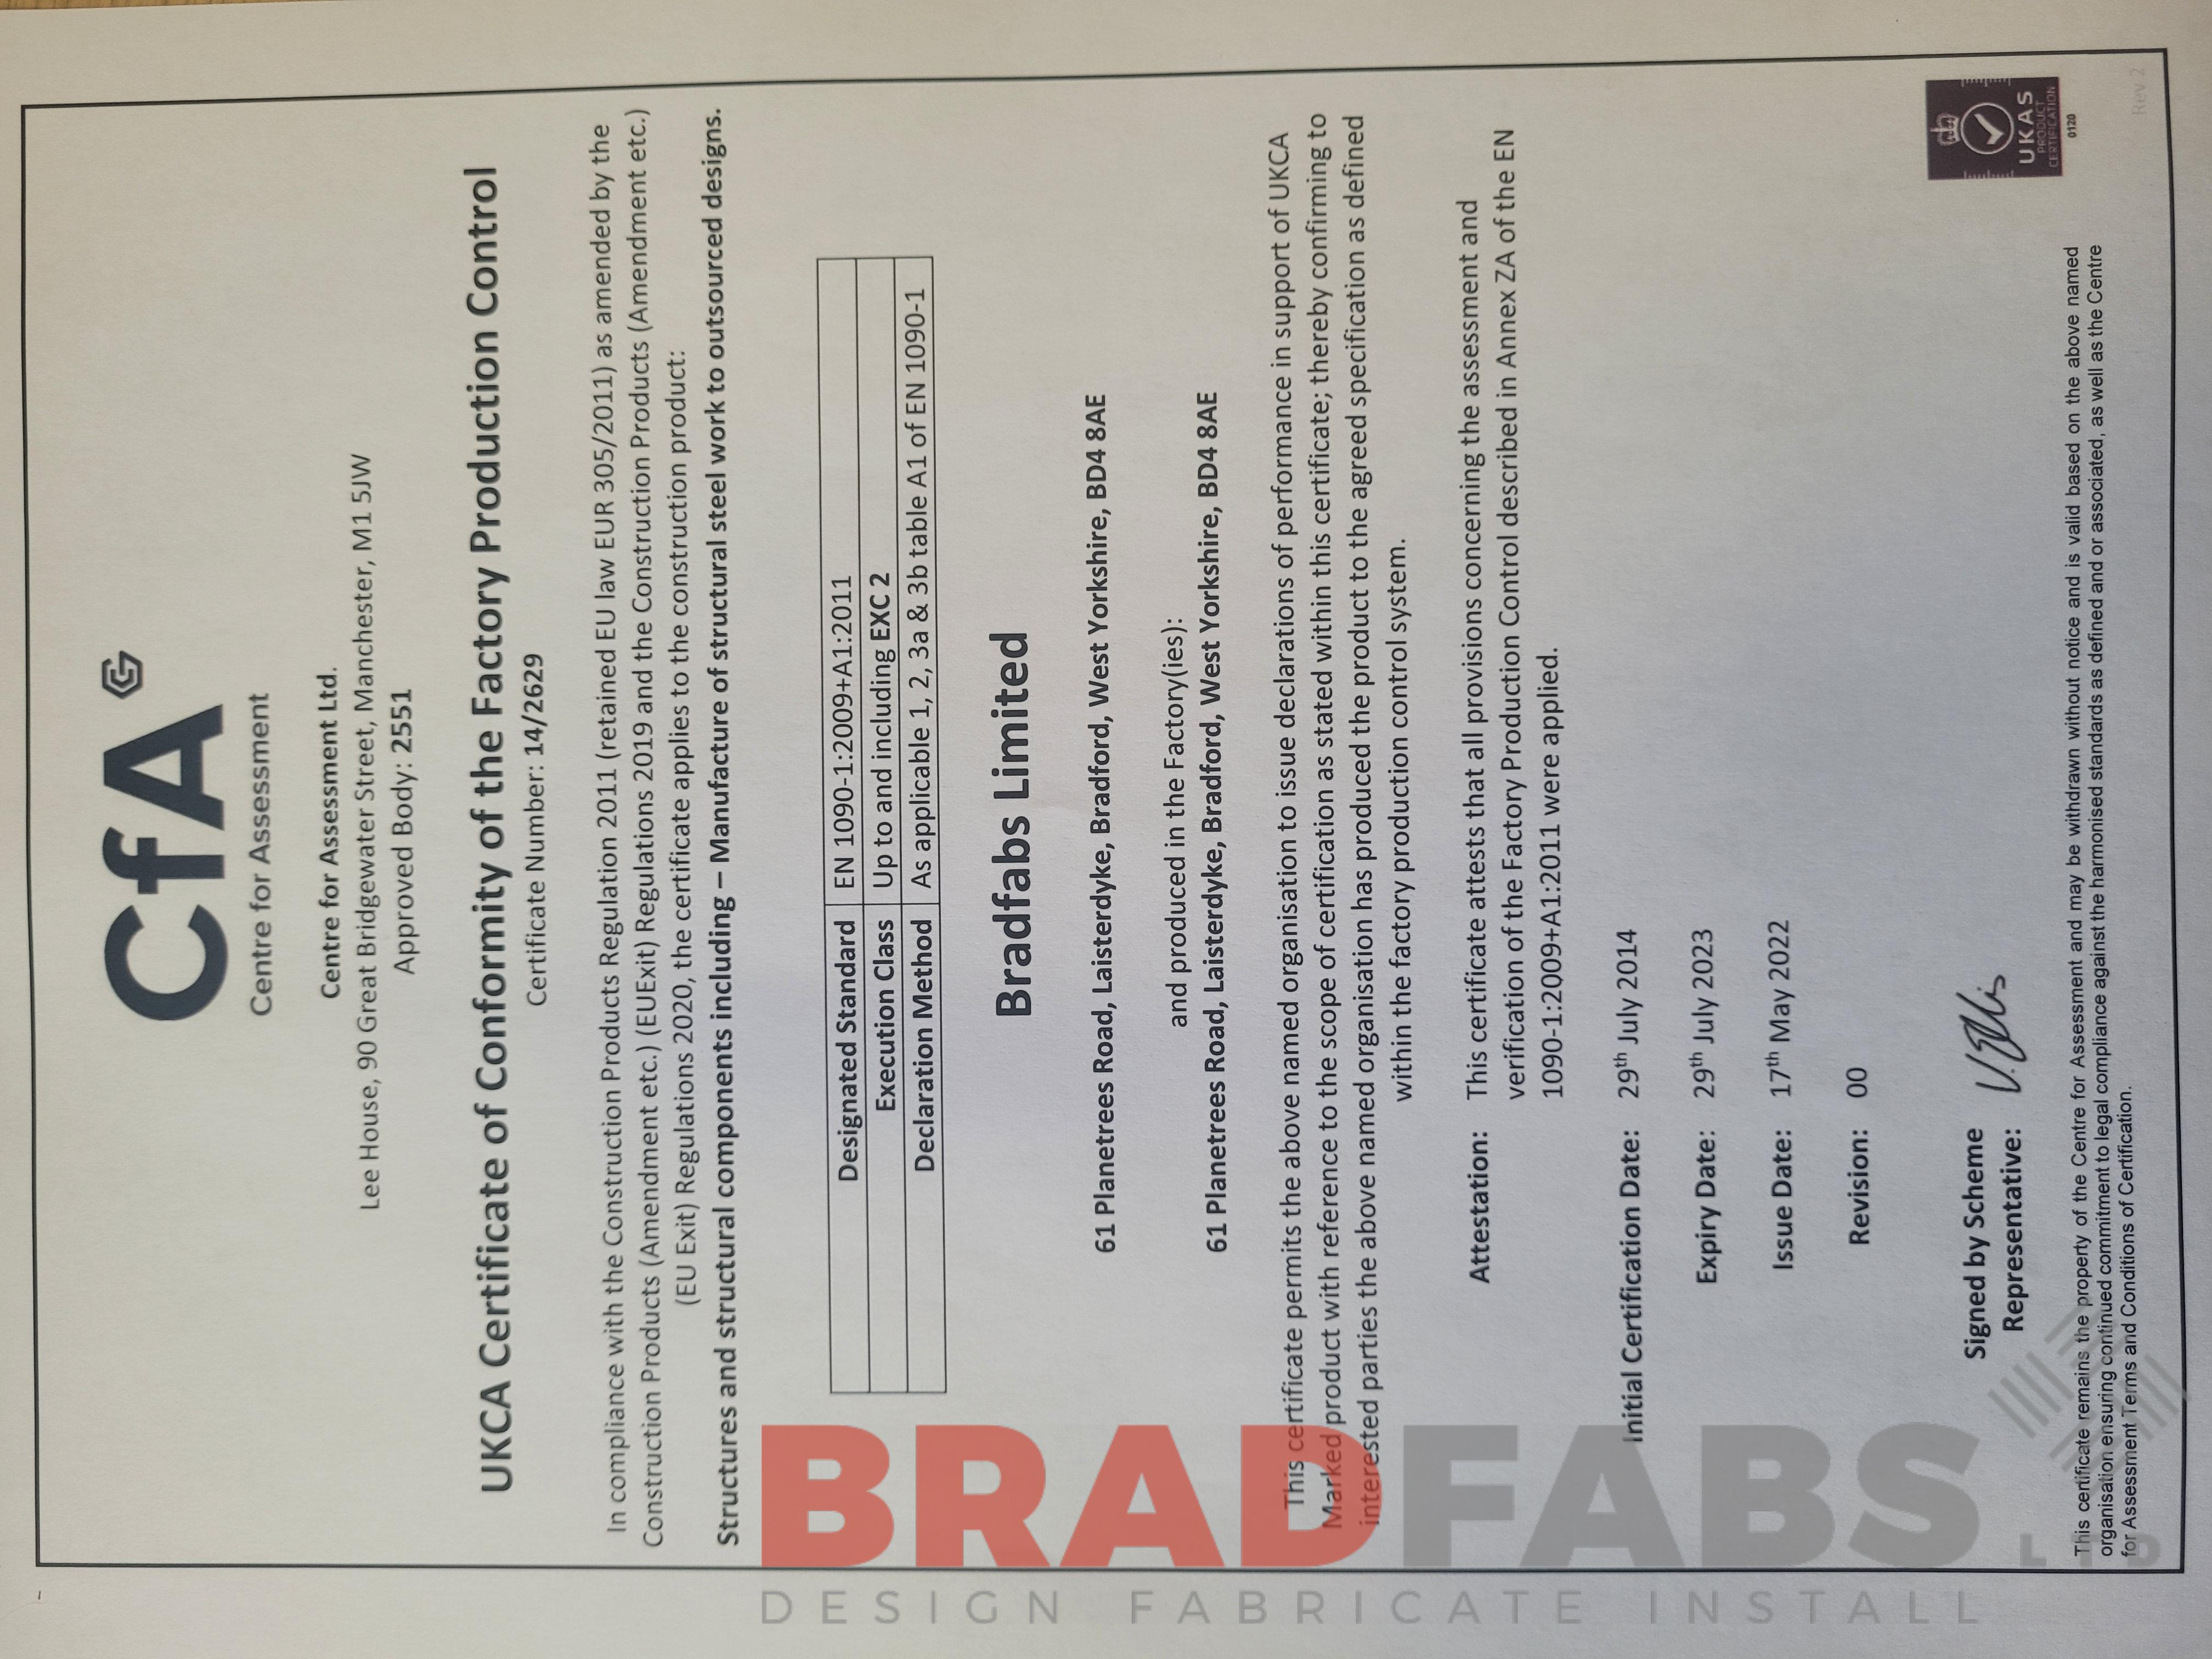 Bradfabs CE certificate